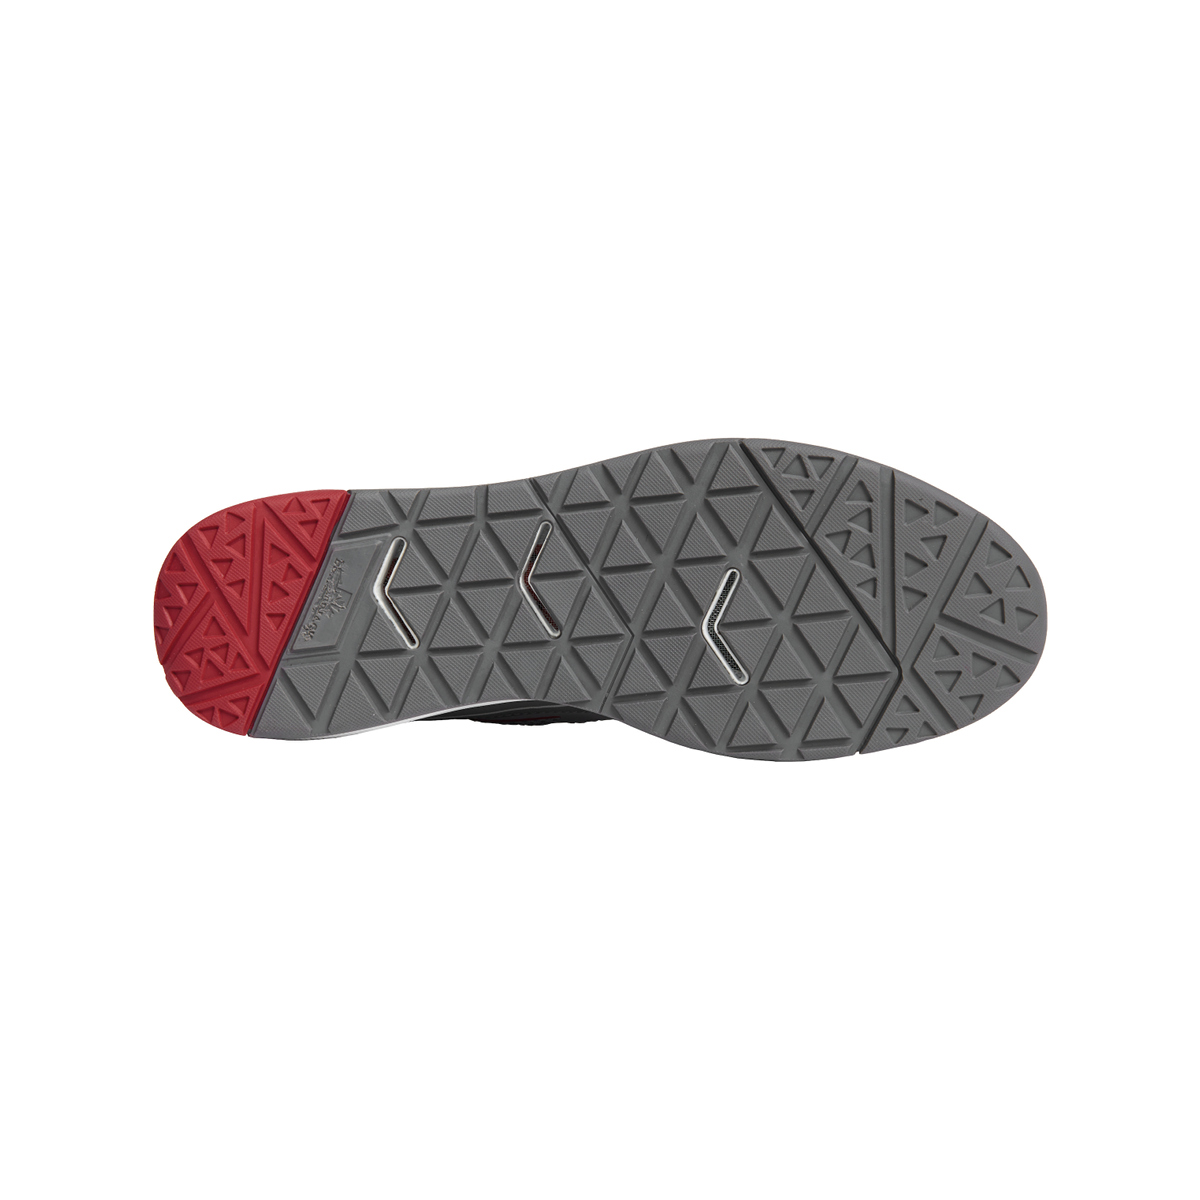 Marinepool Ocean Runner chaussure de pont, unisexe - gris, pointure 41